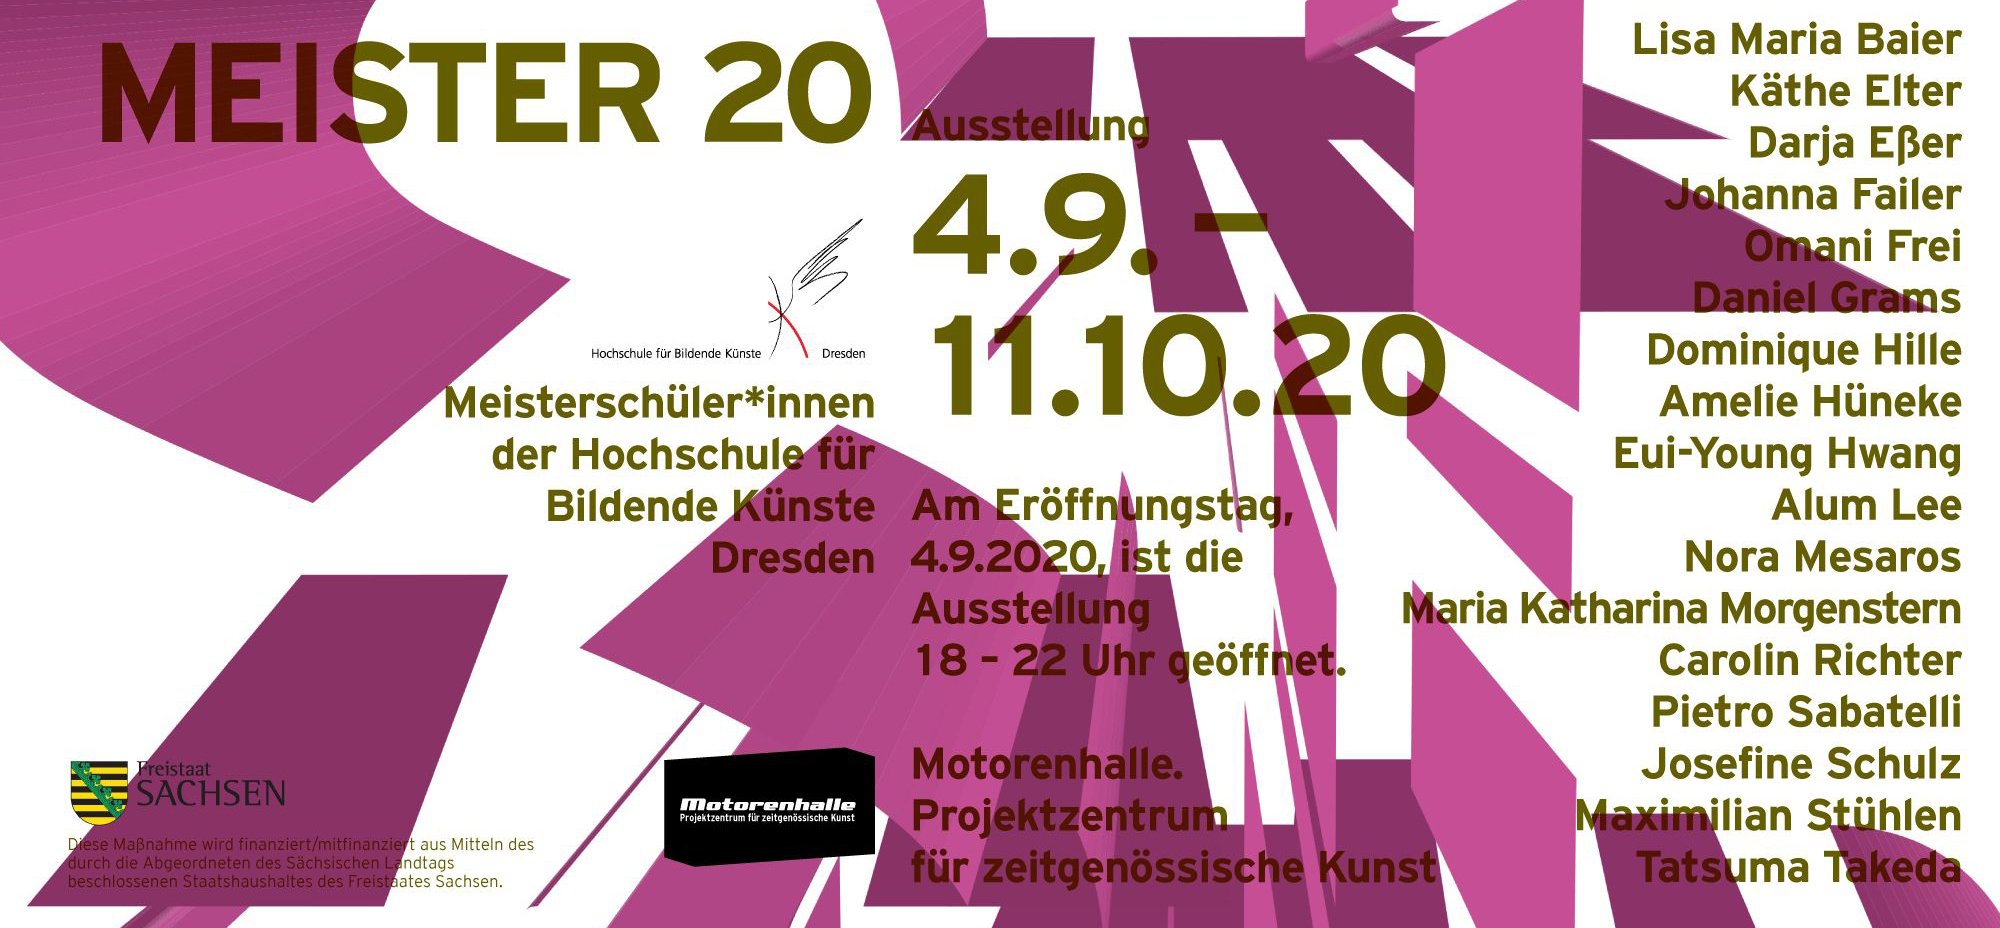 Meister20 exhibition, 2020